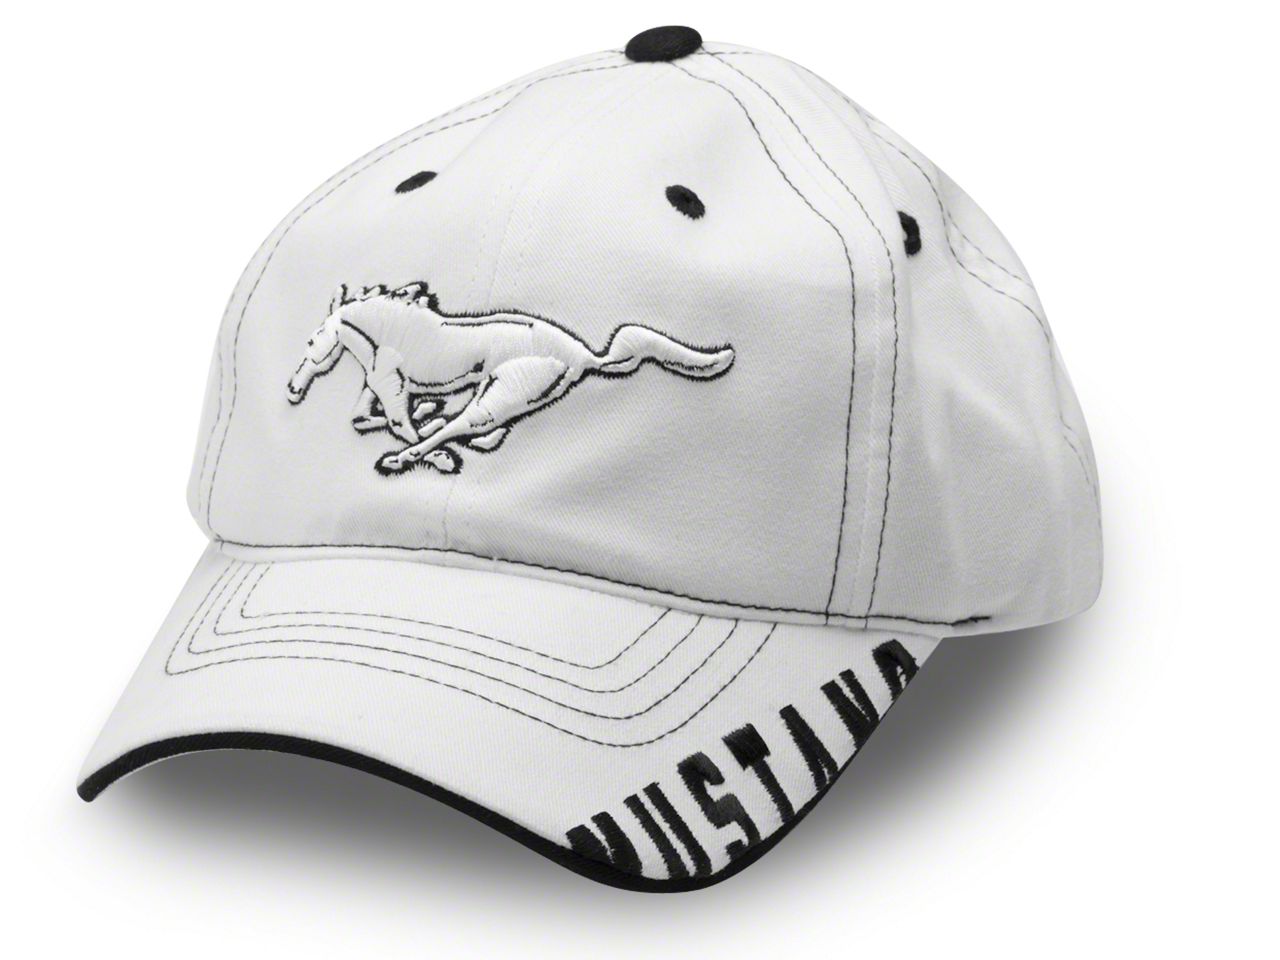 [Vertrauen zuerst, Qualität zuerst] Mustang Hats | Caps Mustang AmericanMuscle & Baseball